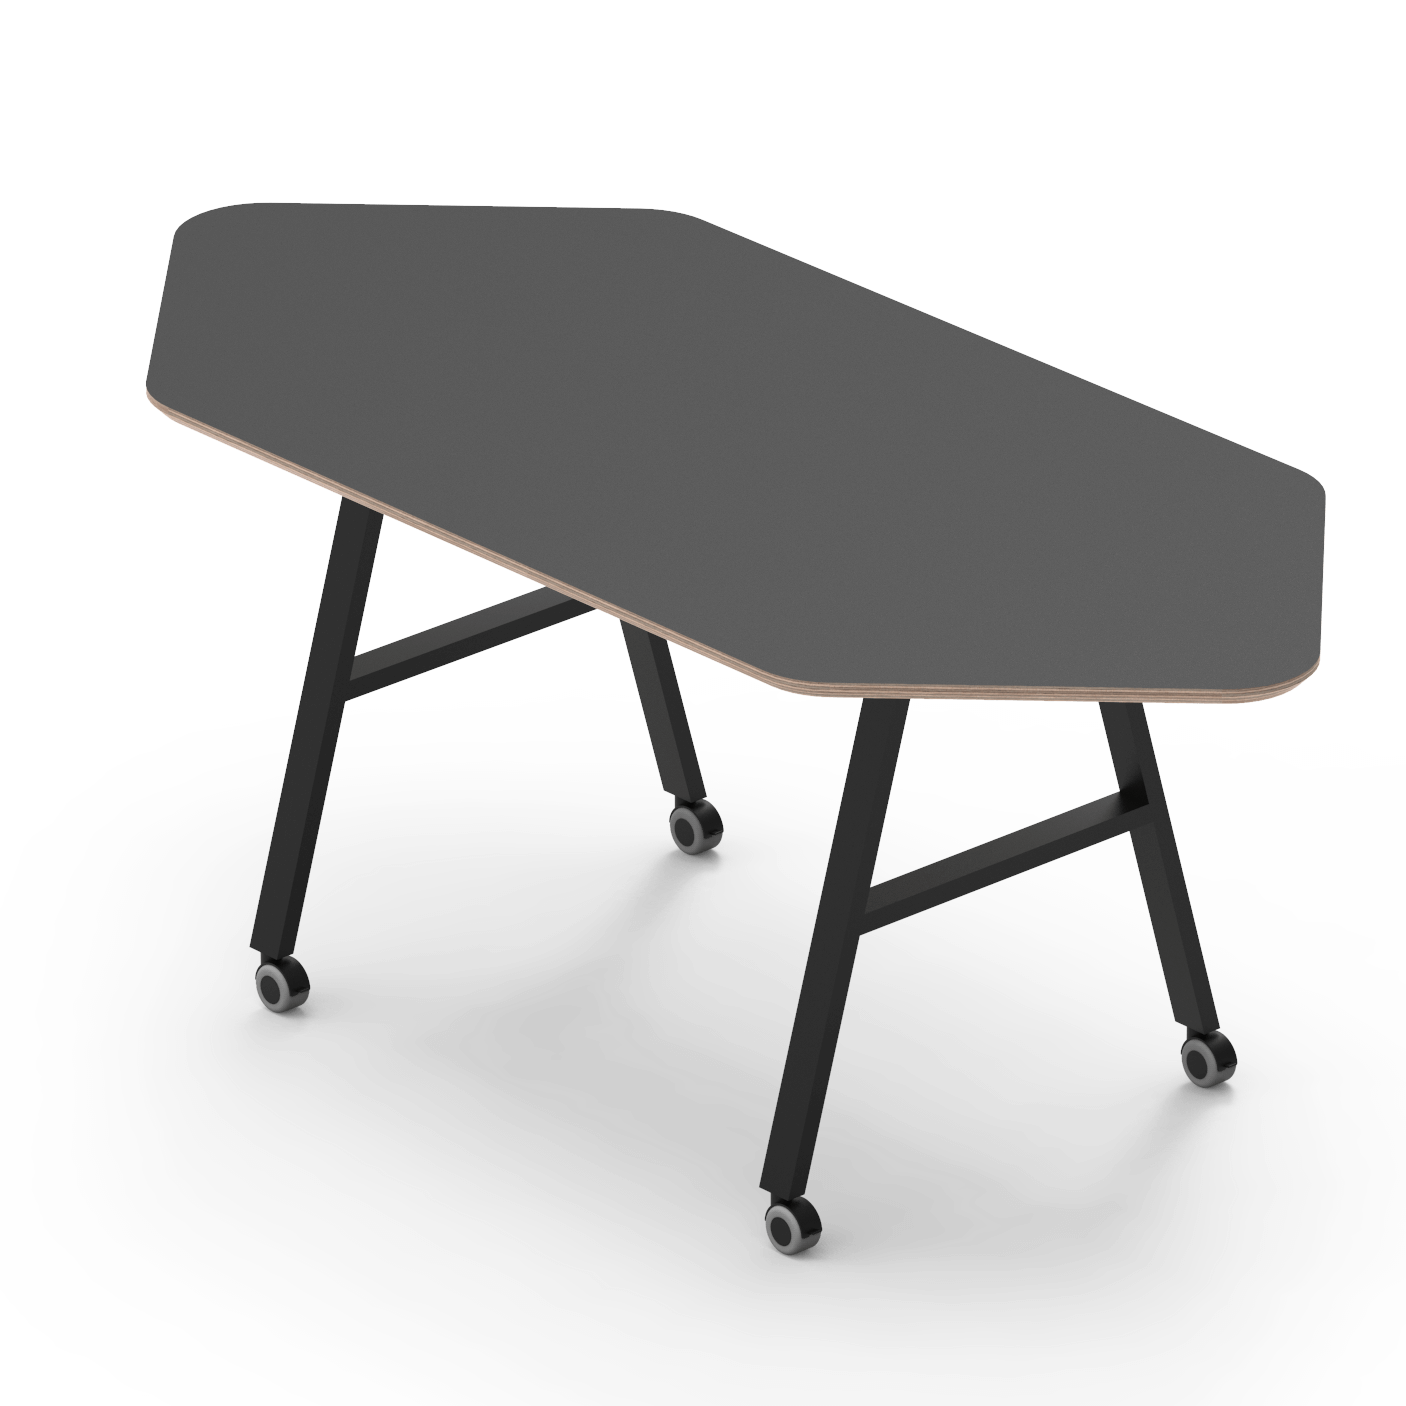 Workagile Anyway modular diamond shaped table in black